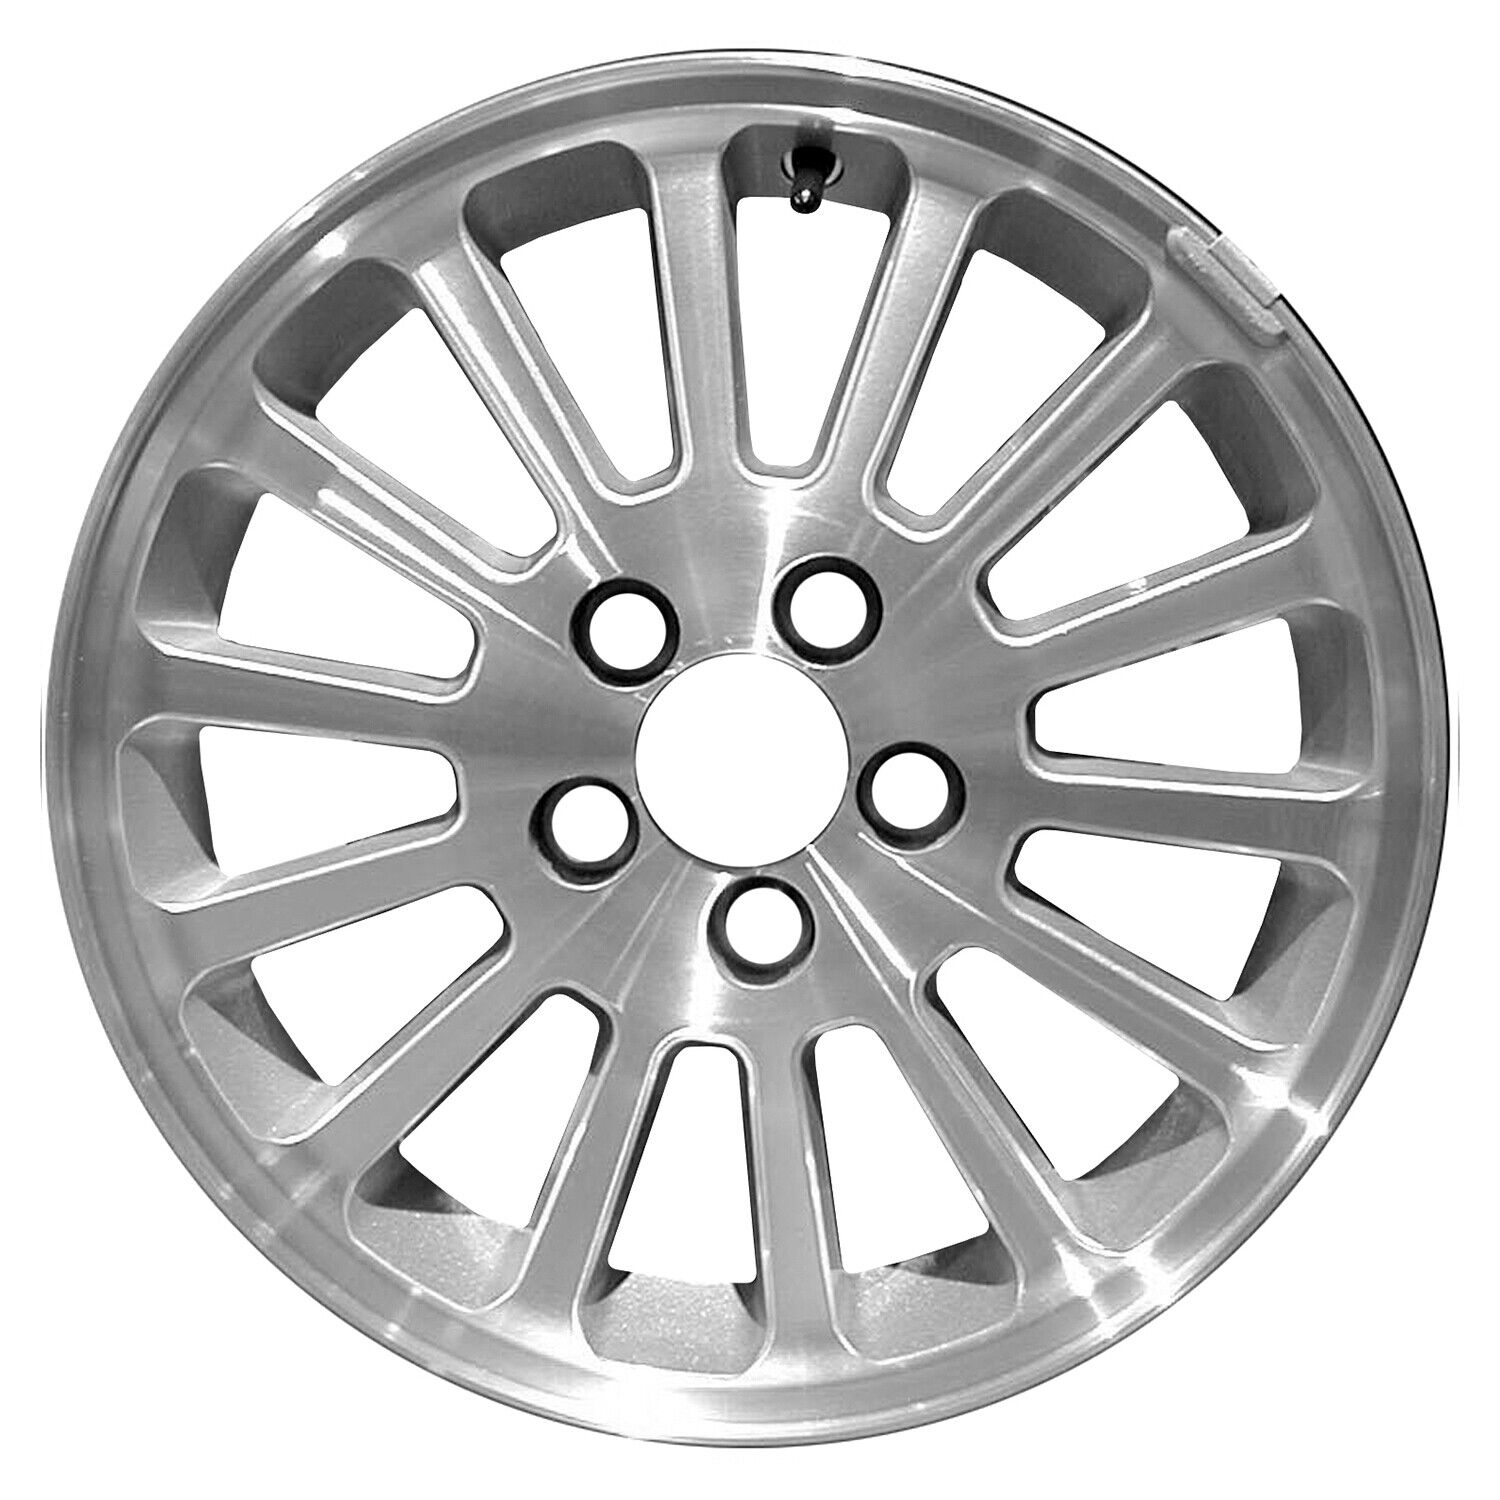 03485 Reconditioned OEM Aluminum Wheel 16x6 fits 2002-2005 Mercury Sable